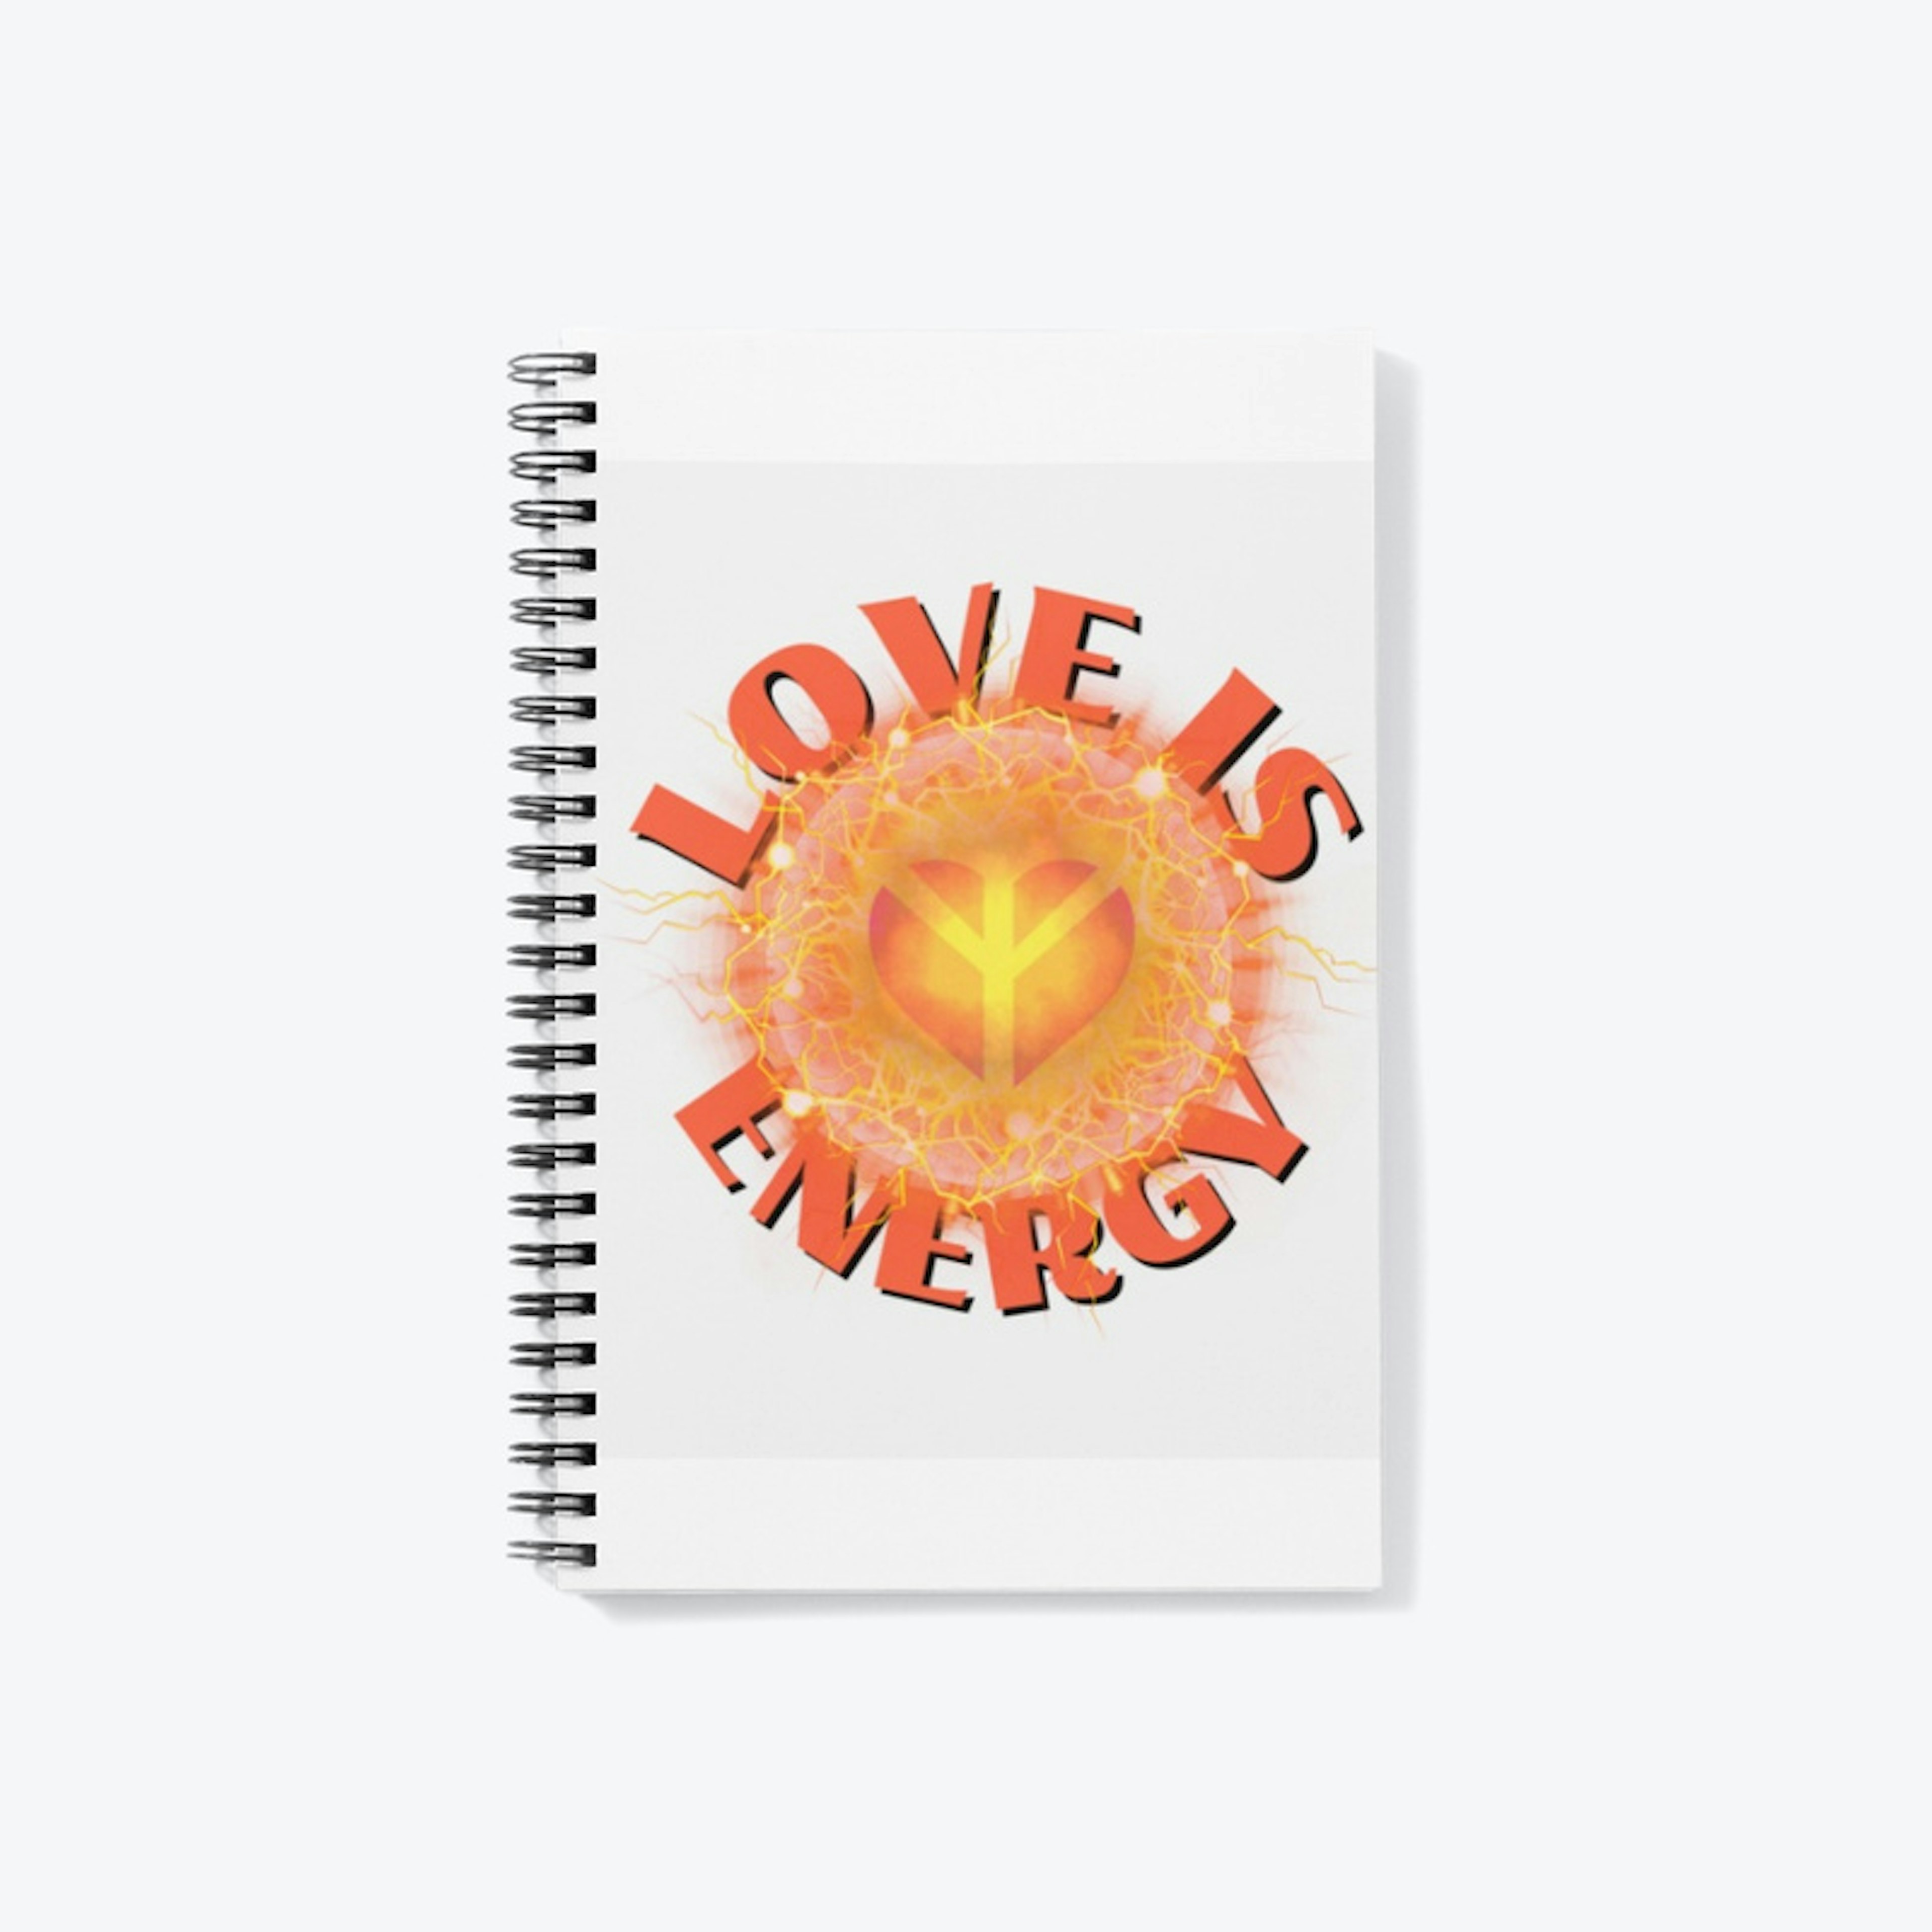 MLFP - Love is energy notebook merch